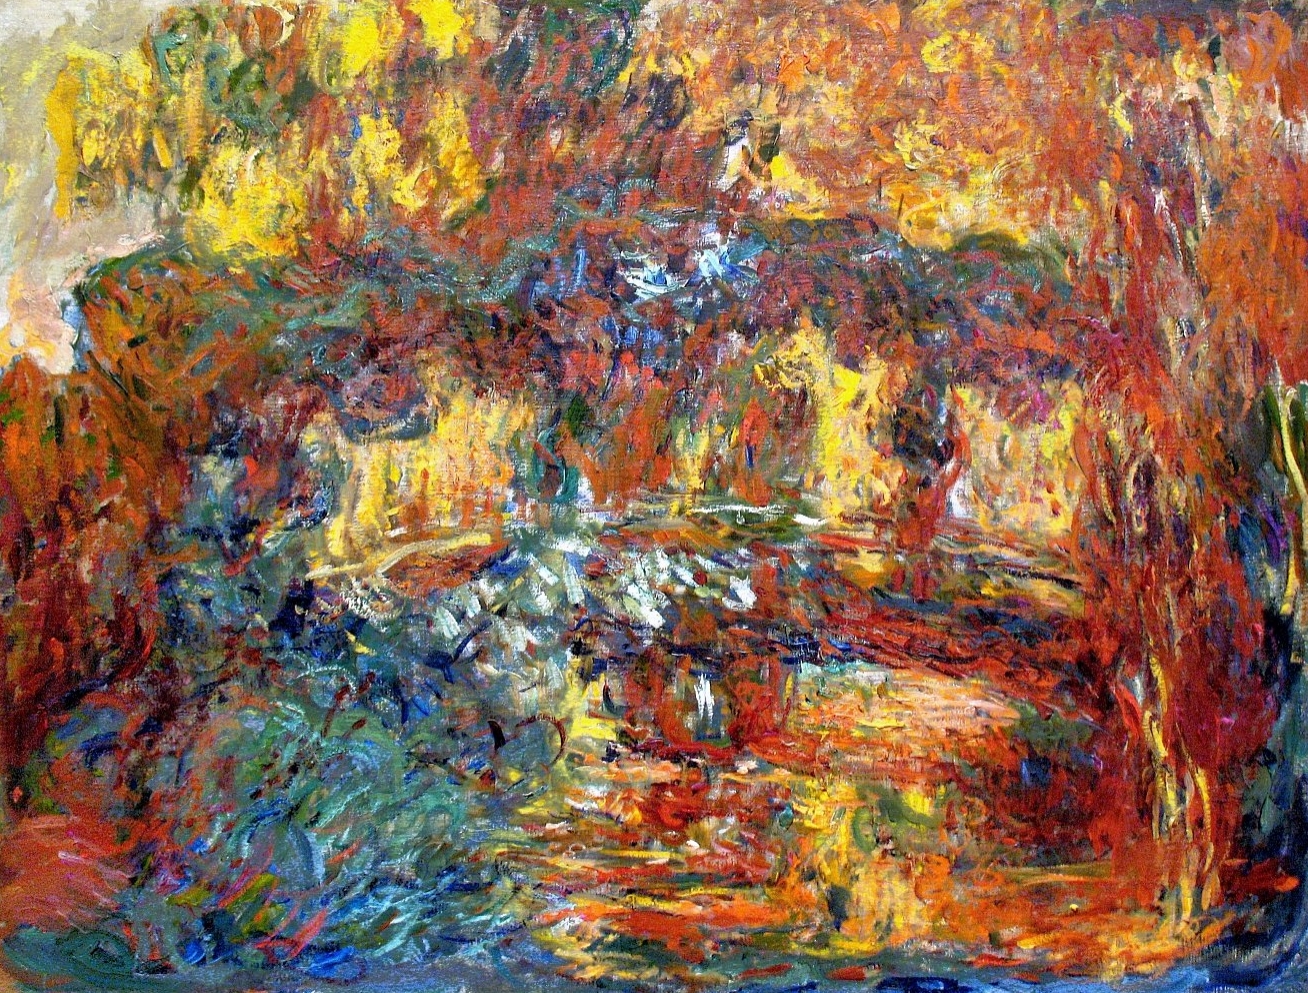 Claude+Monet-1840-1926 (468).jpg